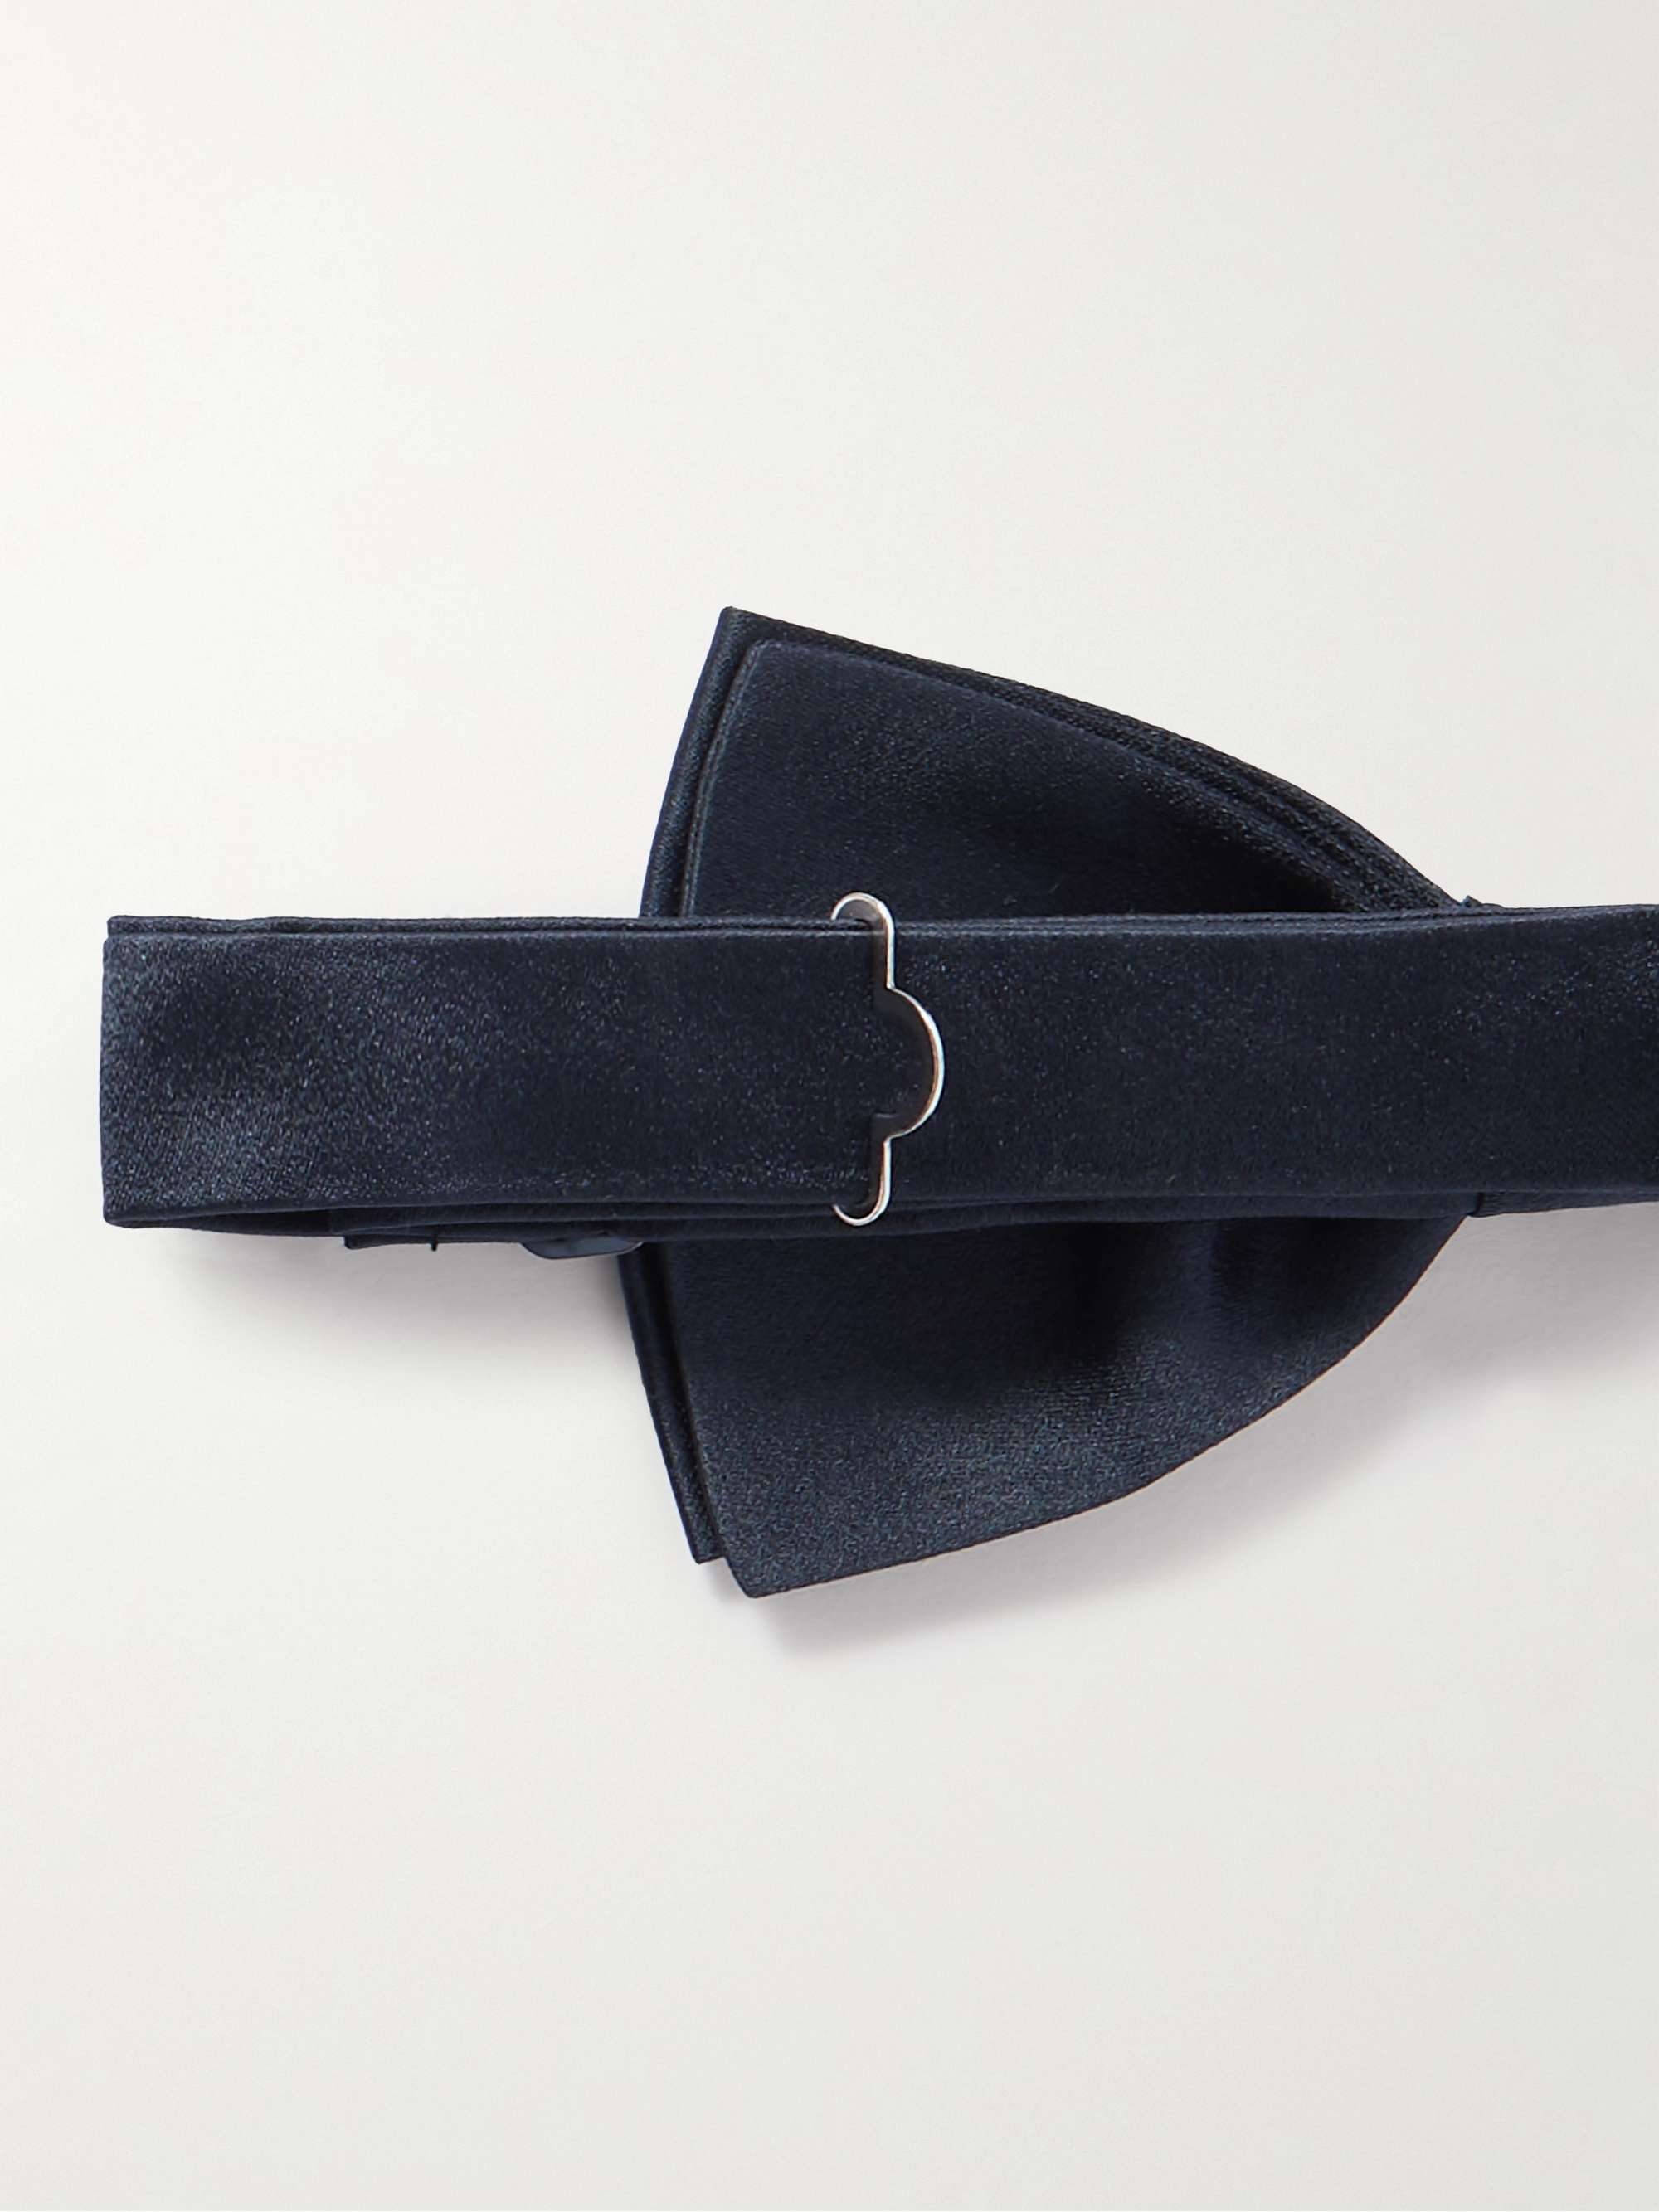 Leather belt in black - Canali